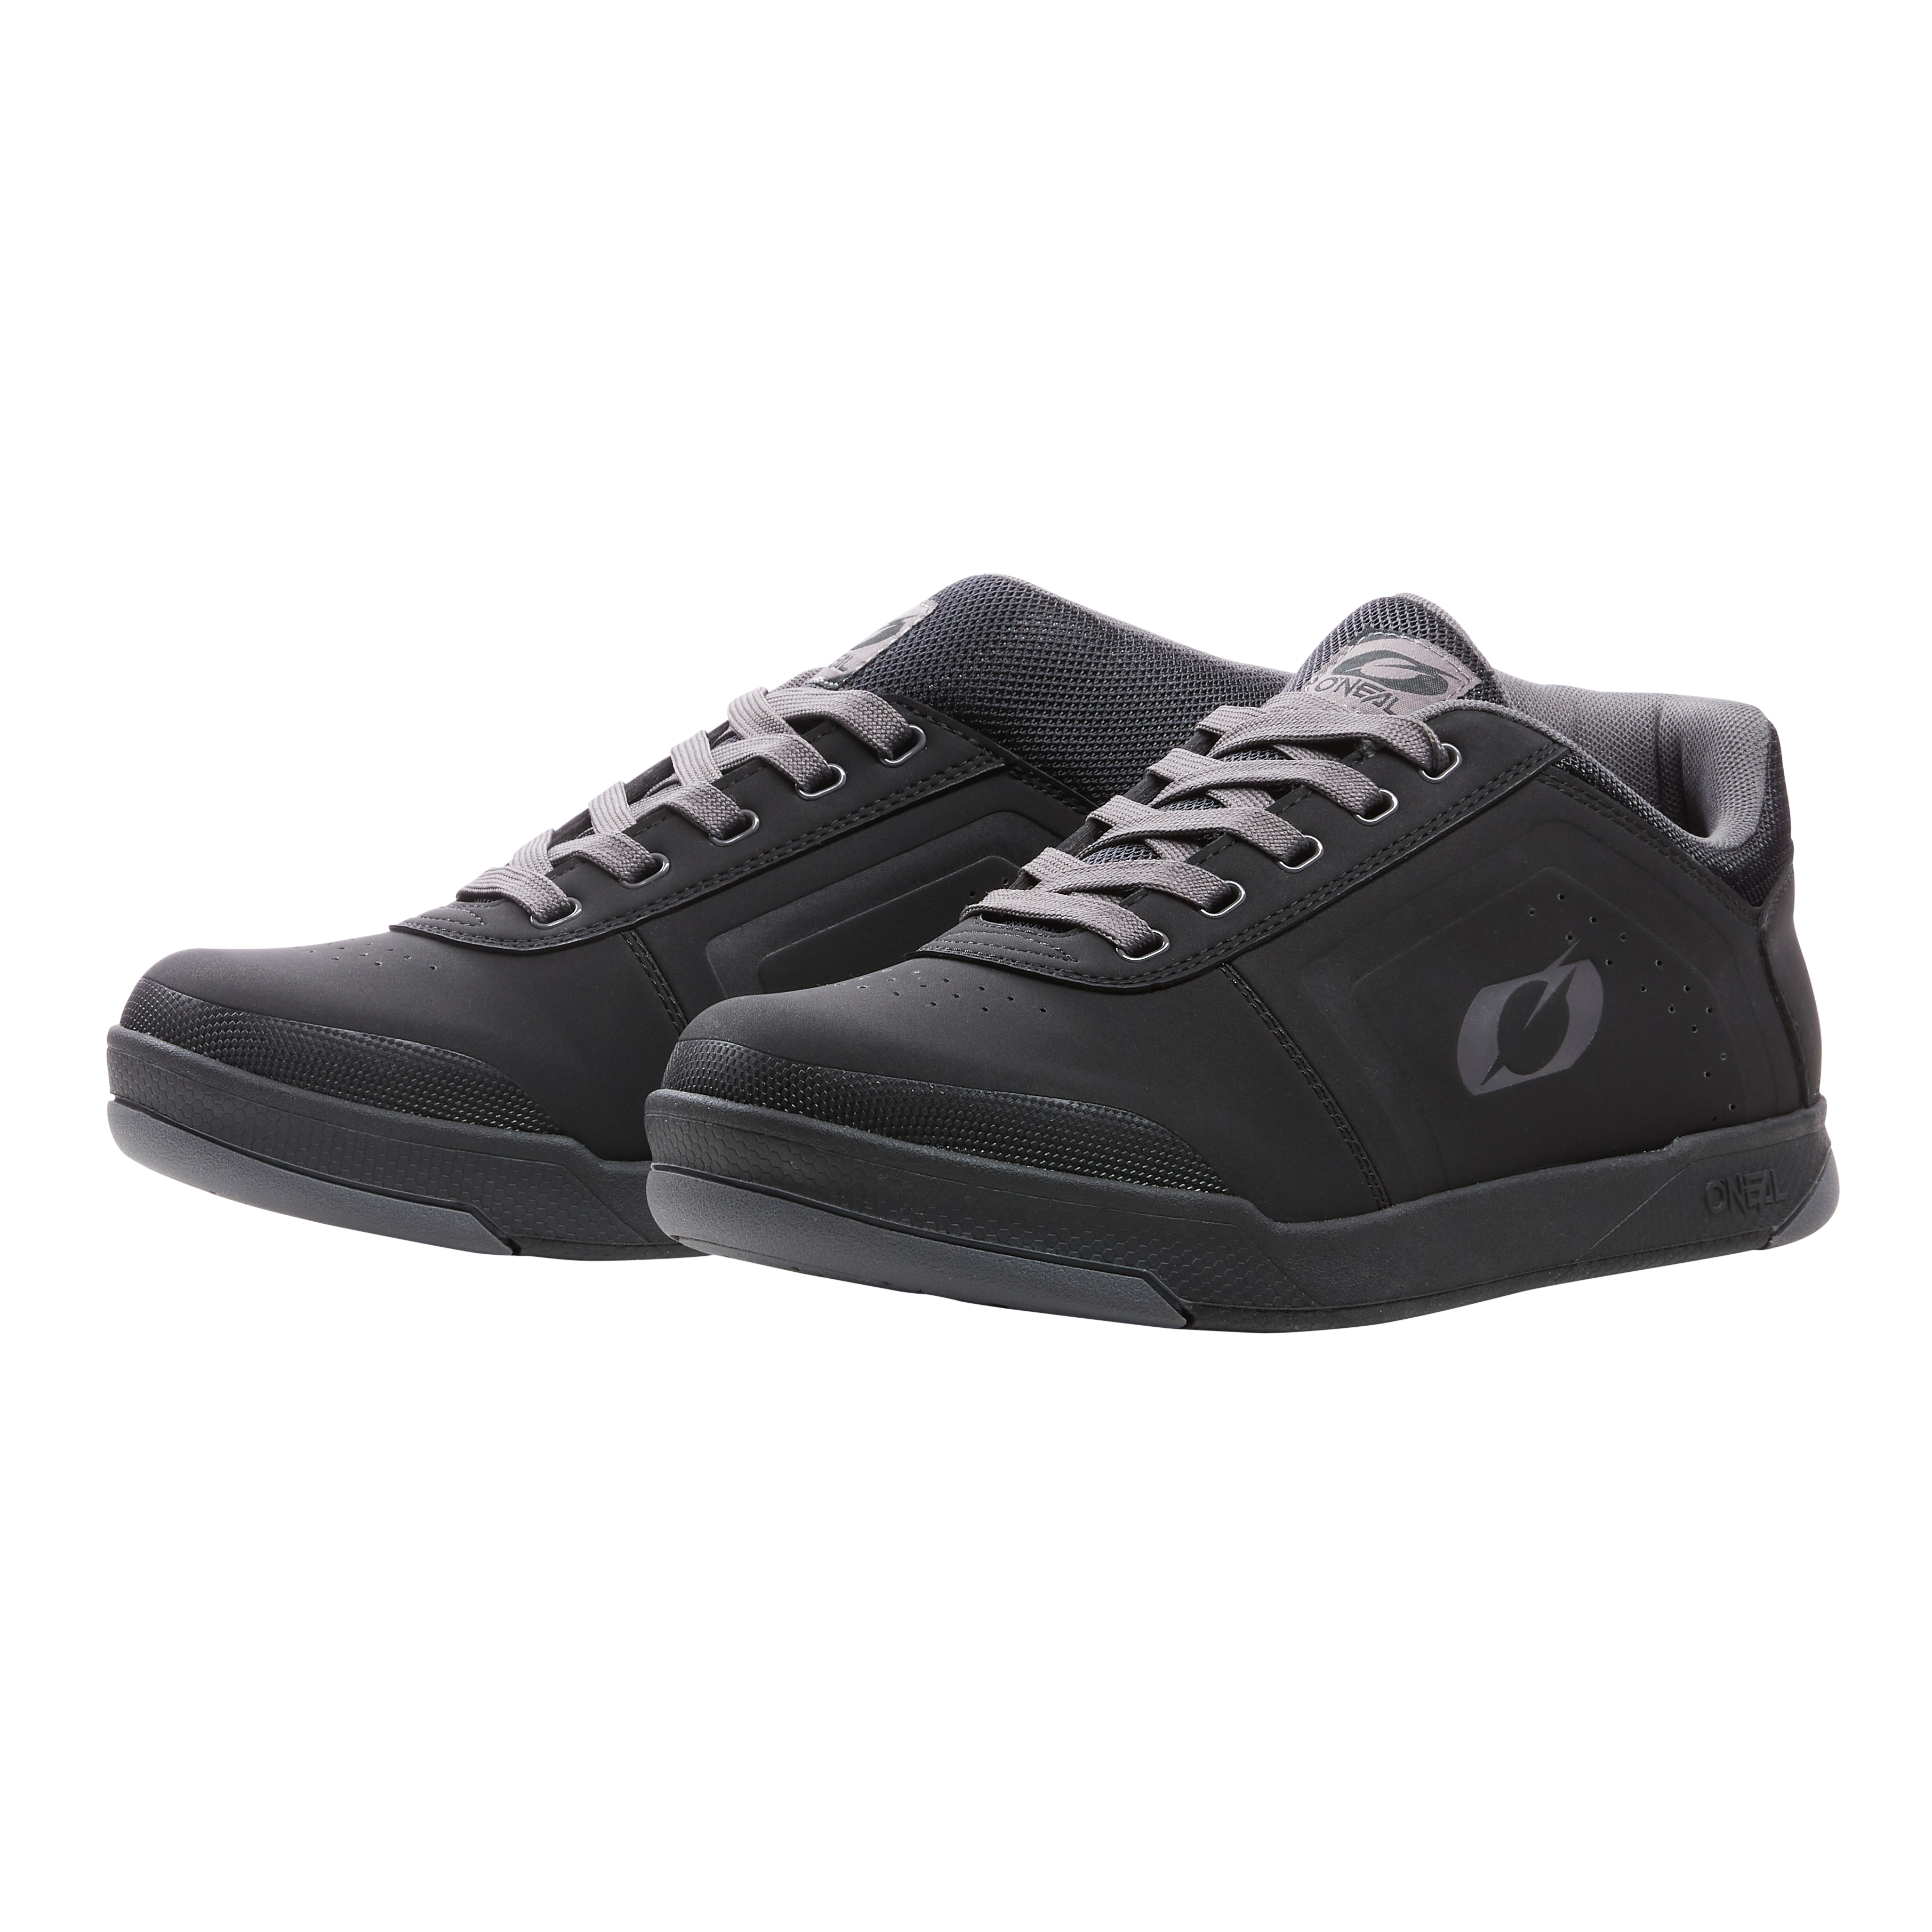 Pinned Pro Flat Pedal Shoe Black/Gray